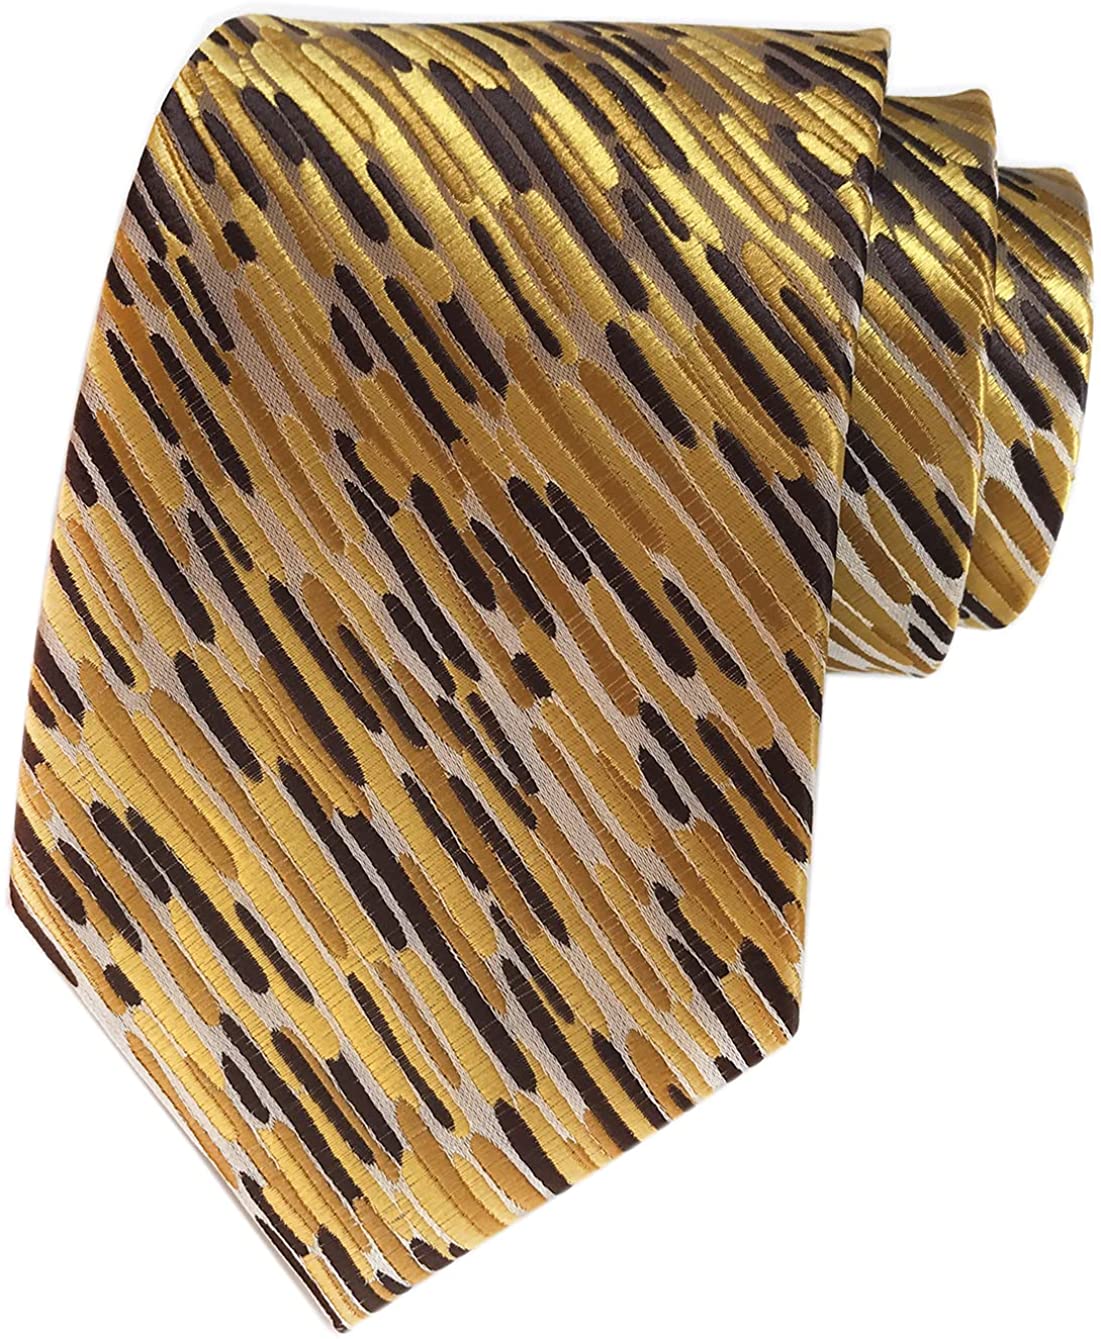 Details about   Men's Novelty Pattern Tie Polka Dot/Paisley/Striped/Floral Necktie Various Color 